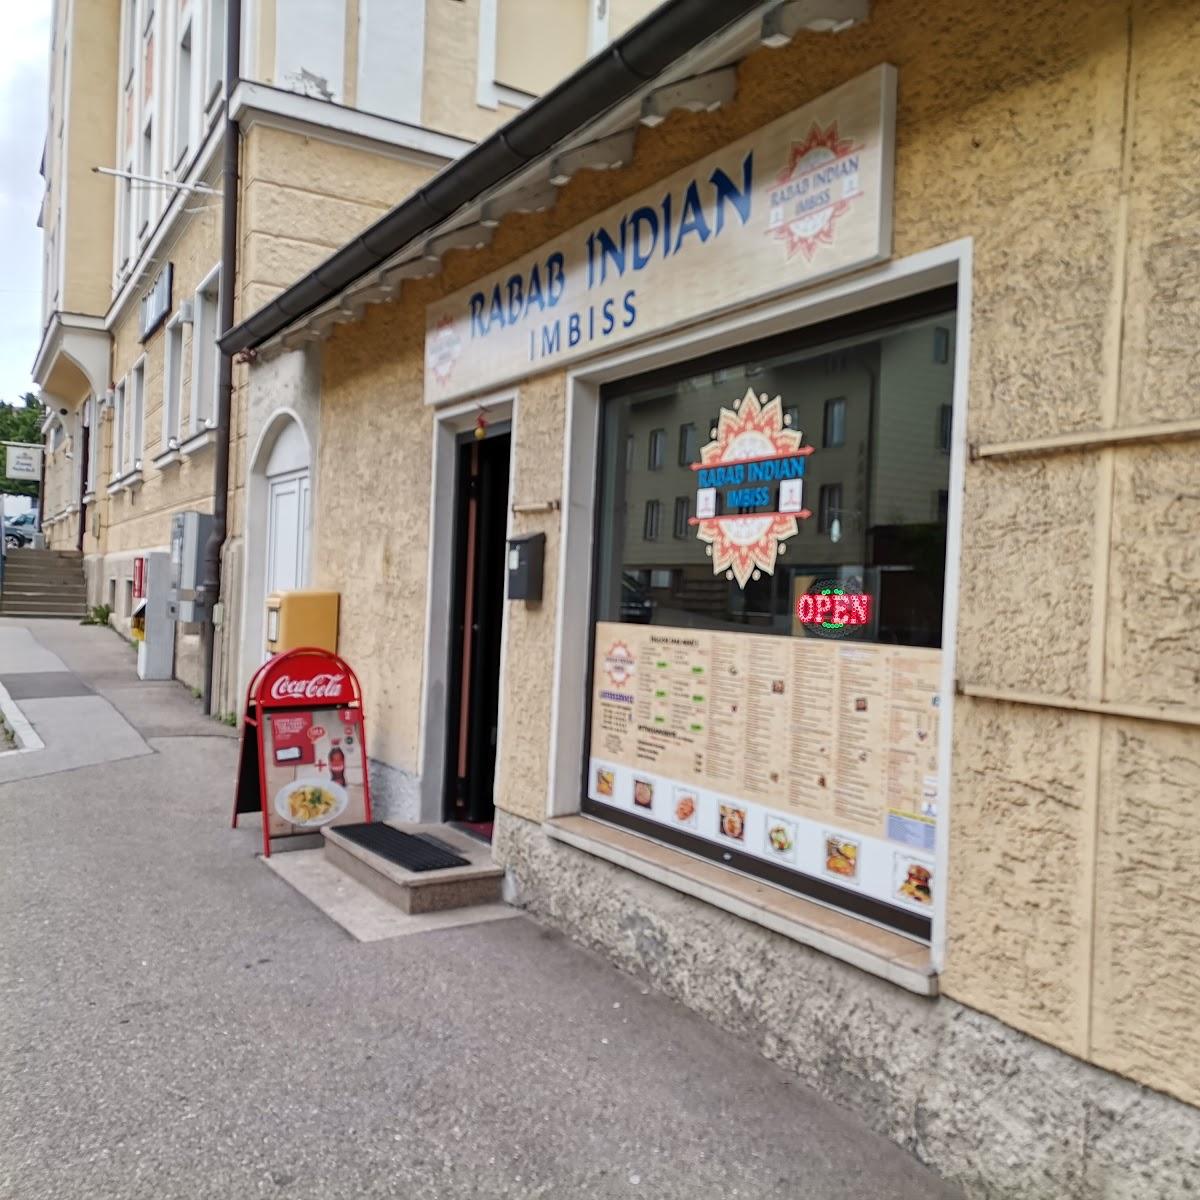 Restaurant "Rabab Indian Imbiss" in  (Allgäu)